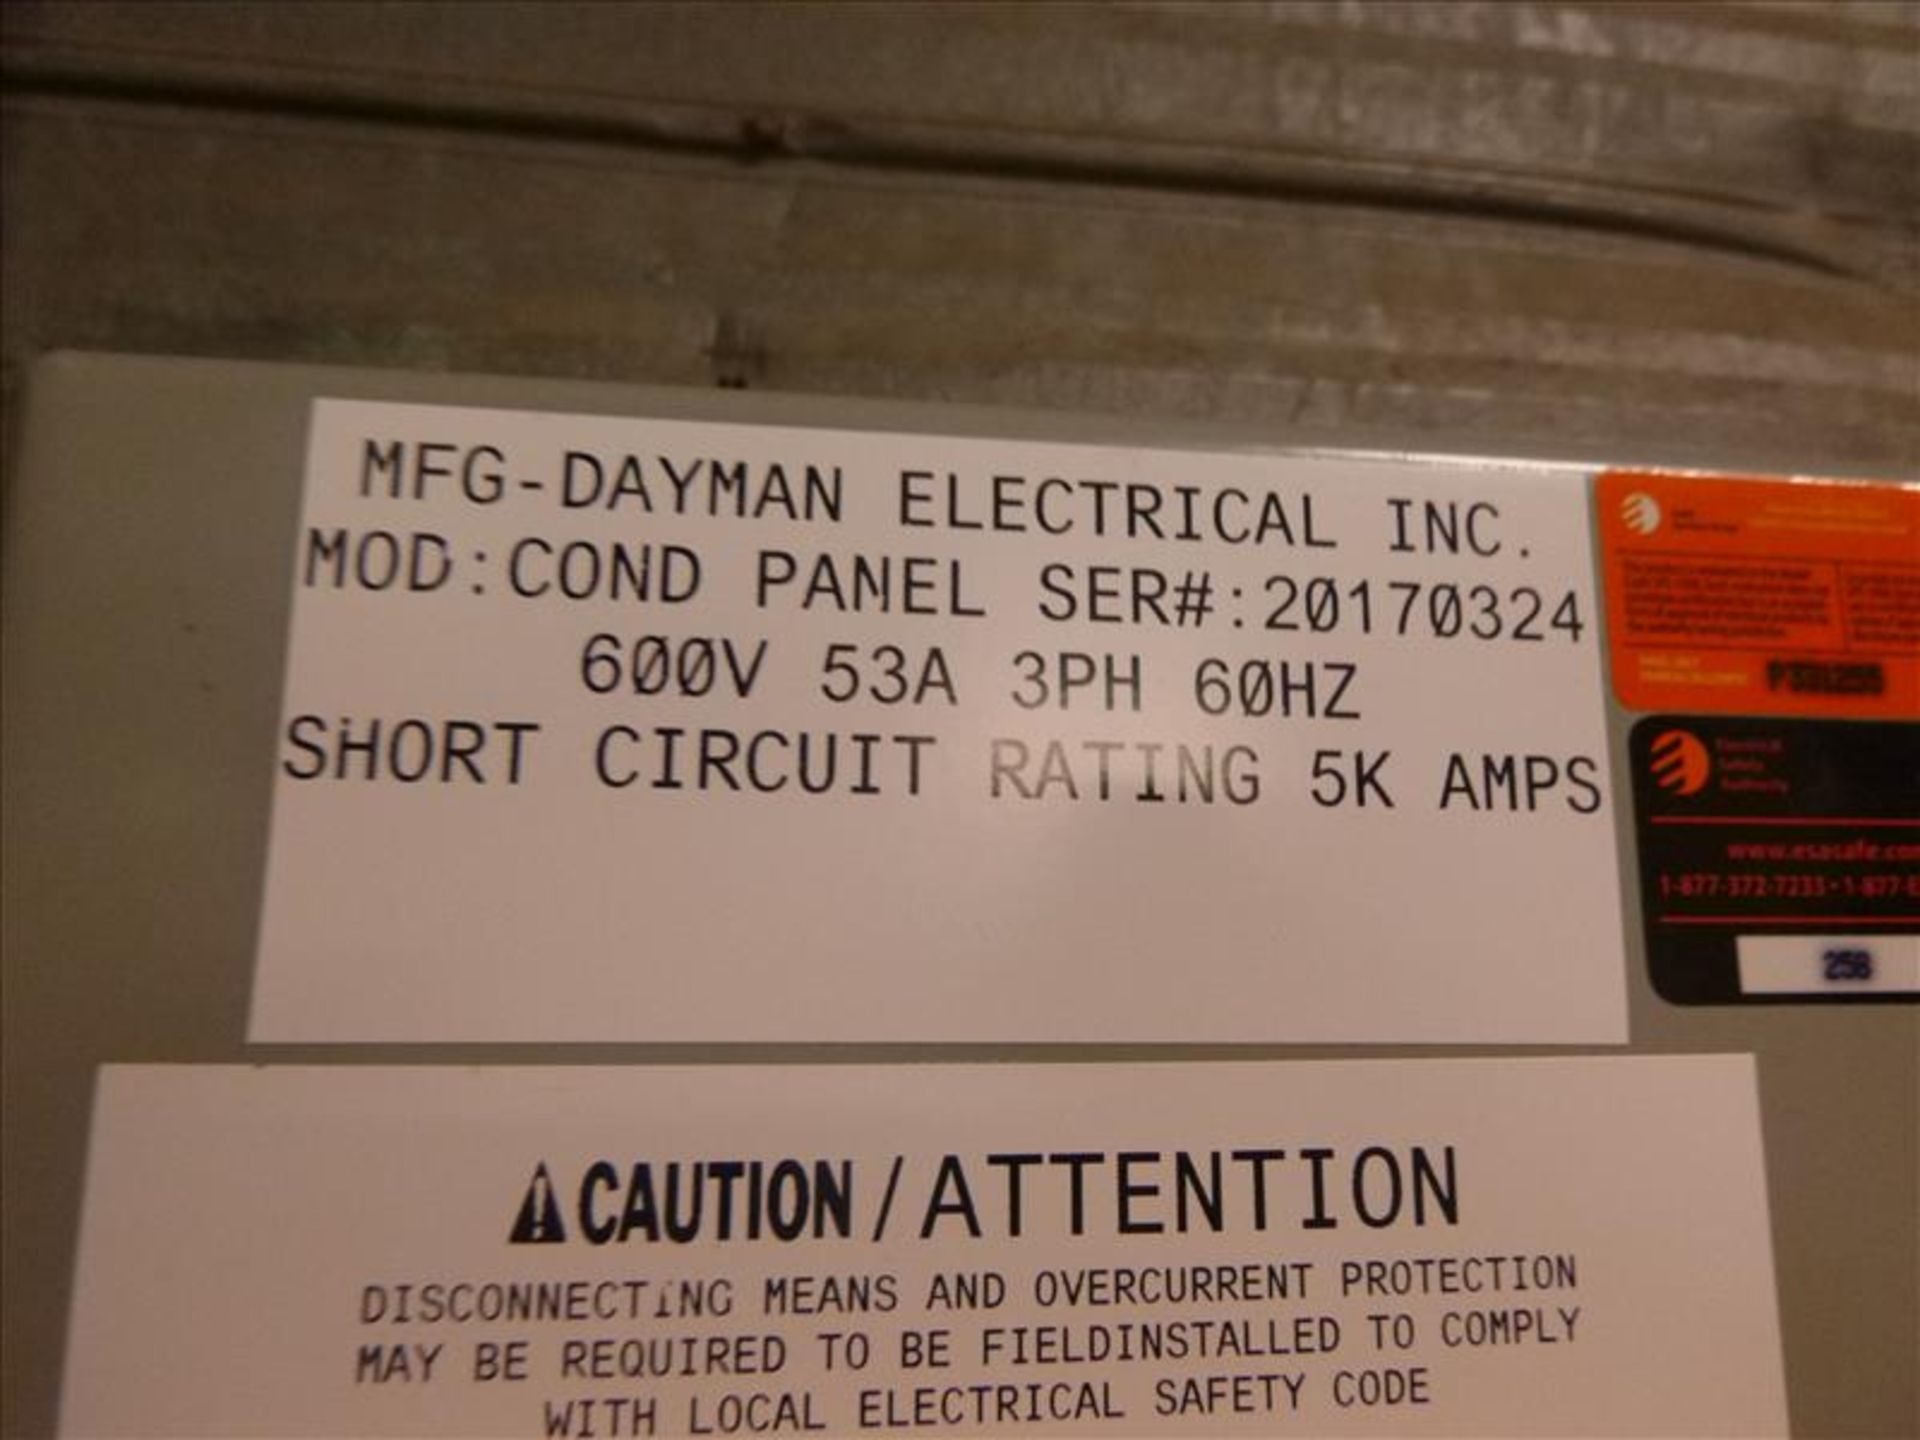 Dayman control panel, ser. no. 20170324 (south basement) - Image 2 of 2